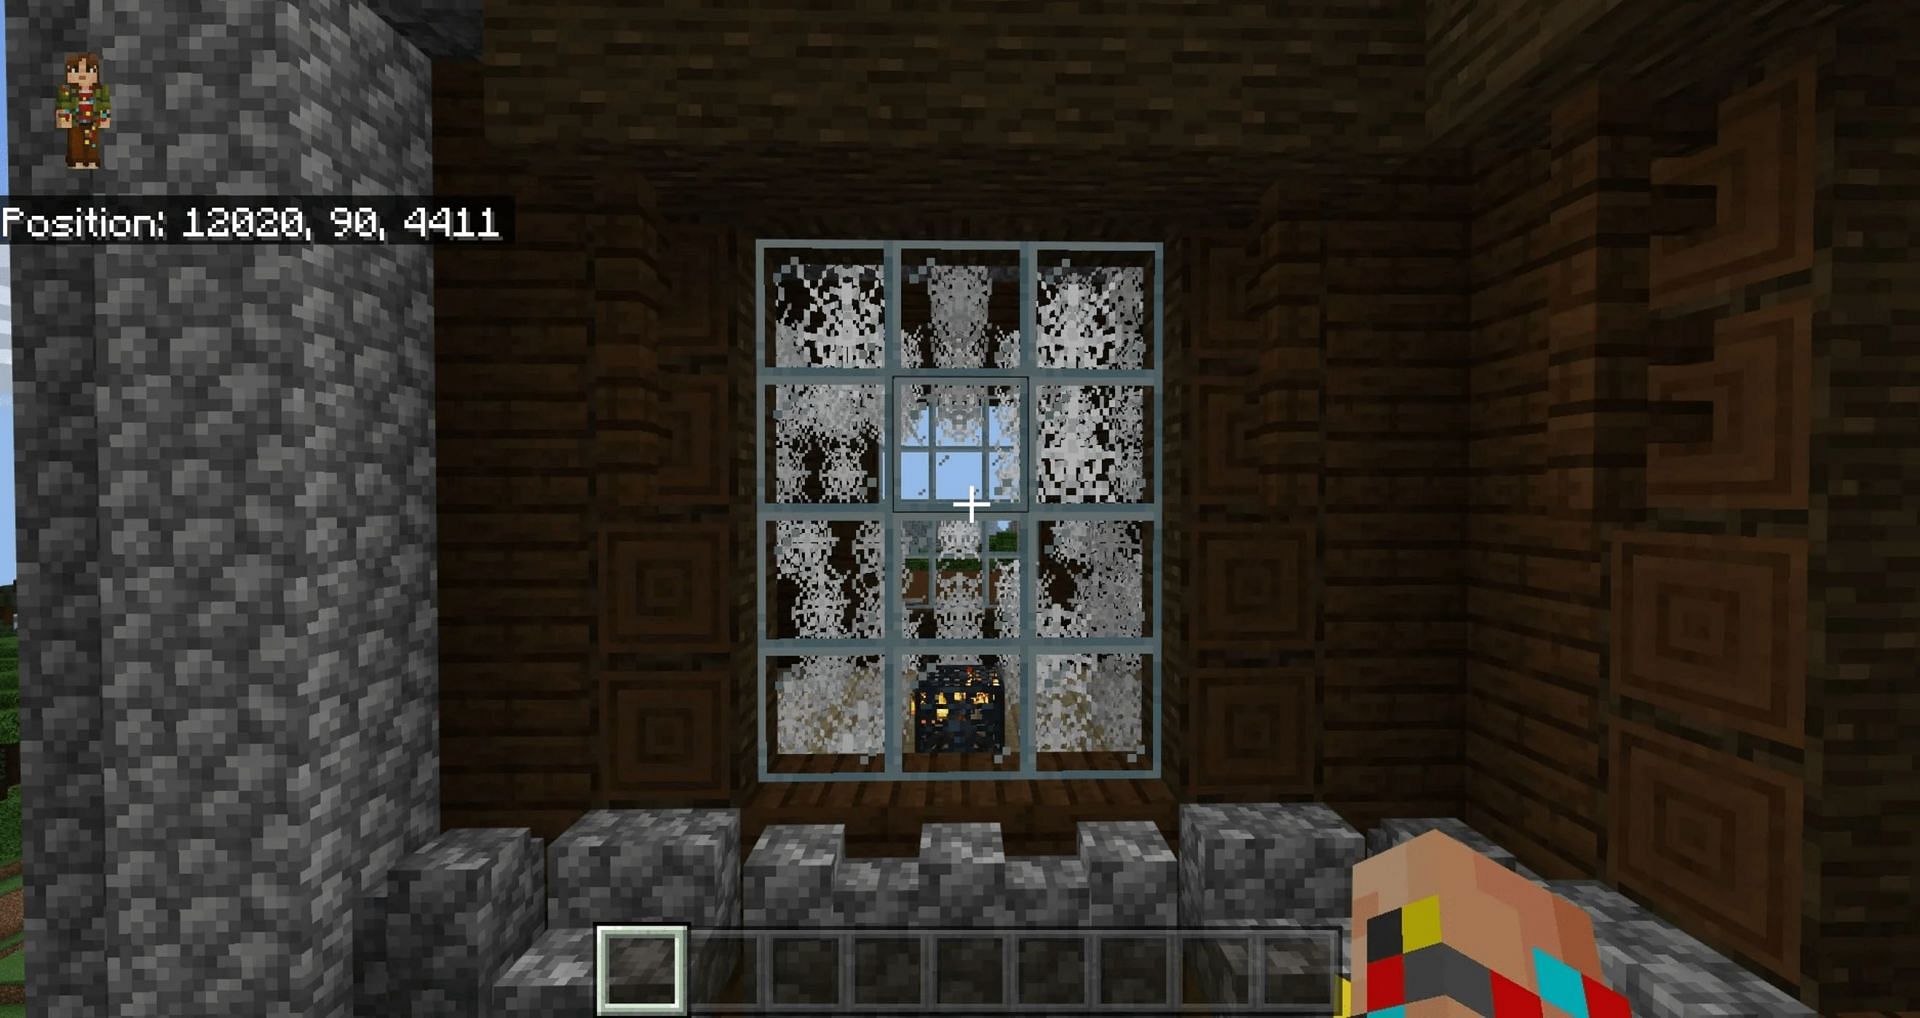 Mansion spawners can occasionally be seen through windows (Image via u/slc_14/Reddit)